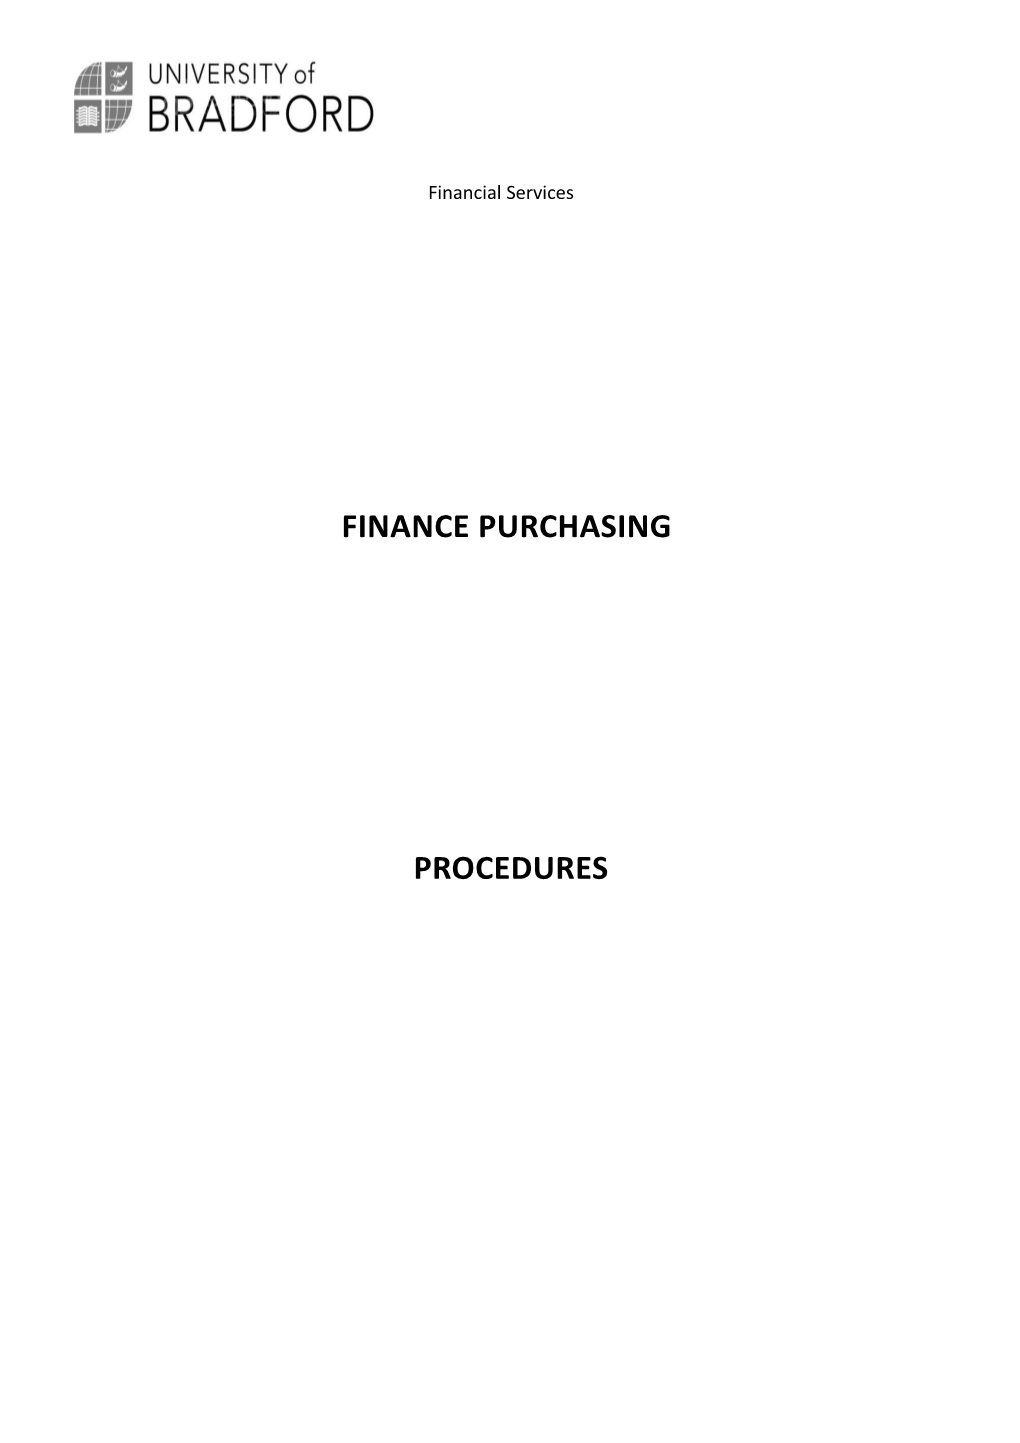 Finance Purchasing